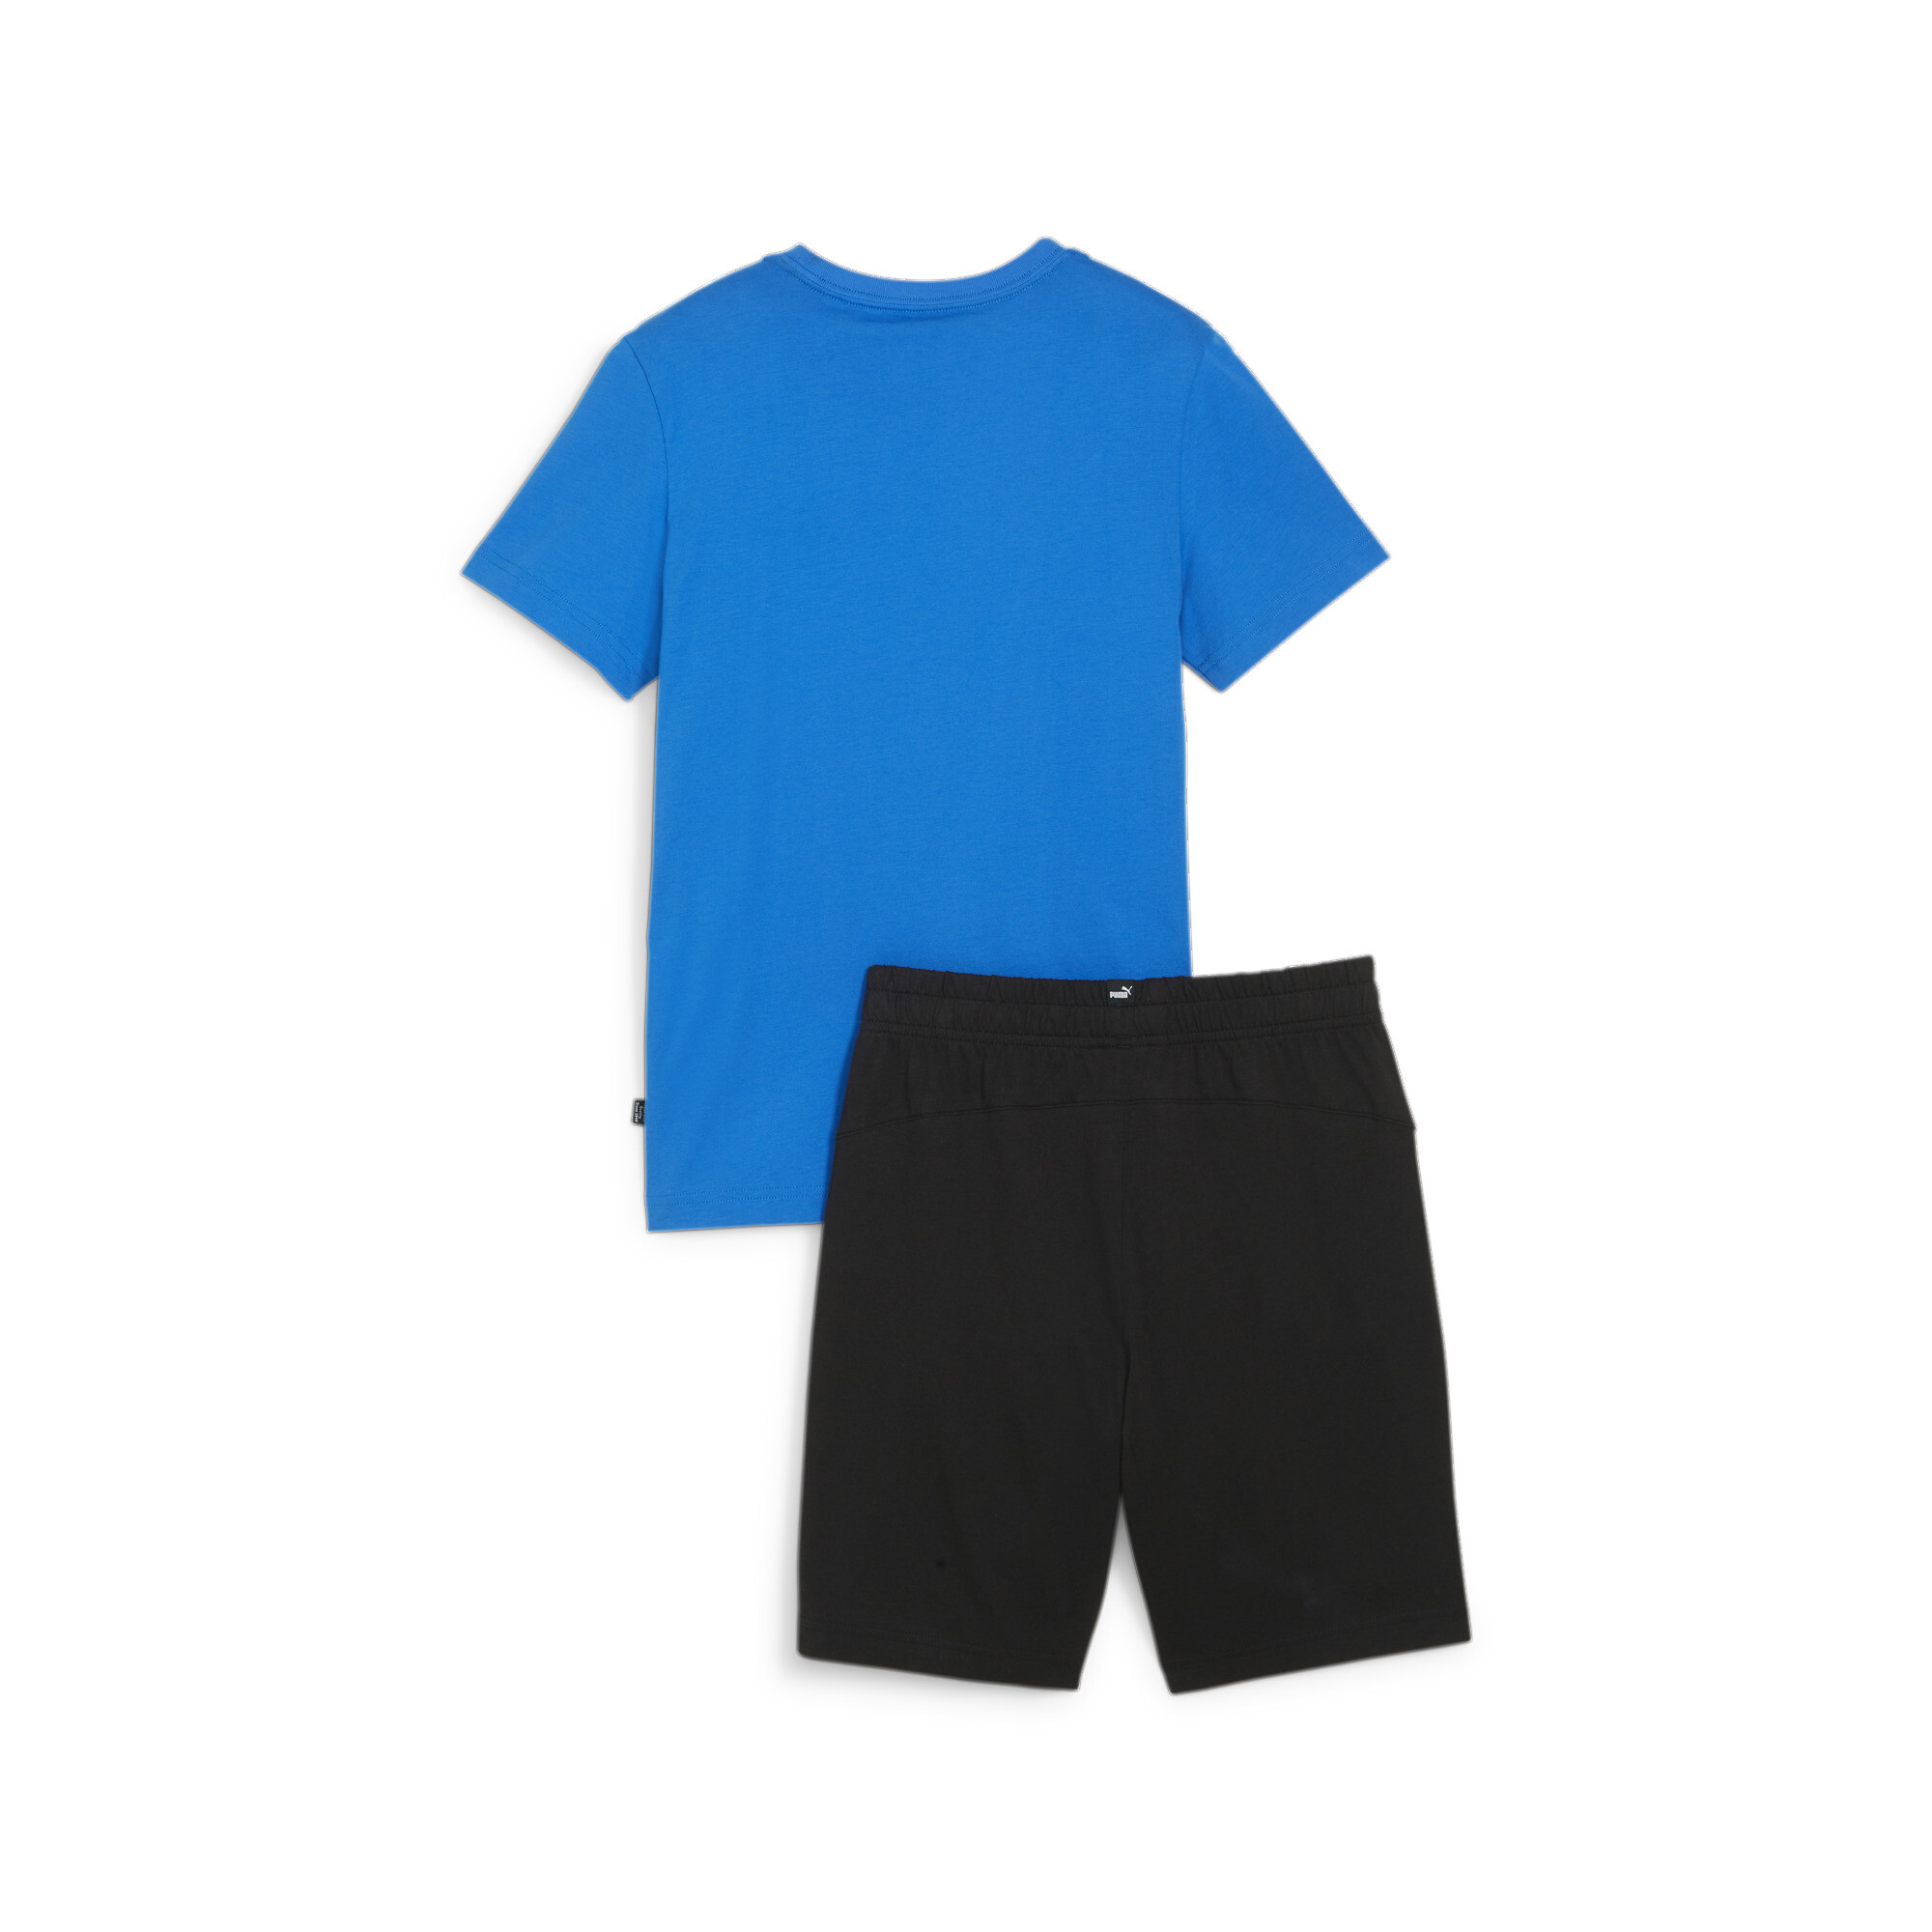 Men's Puma Jersey Youth Shorts Set, Blue, Size 3-4Y, Clothing